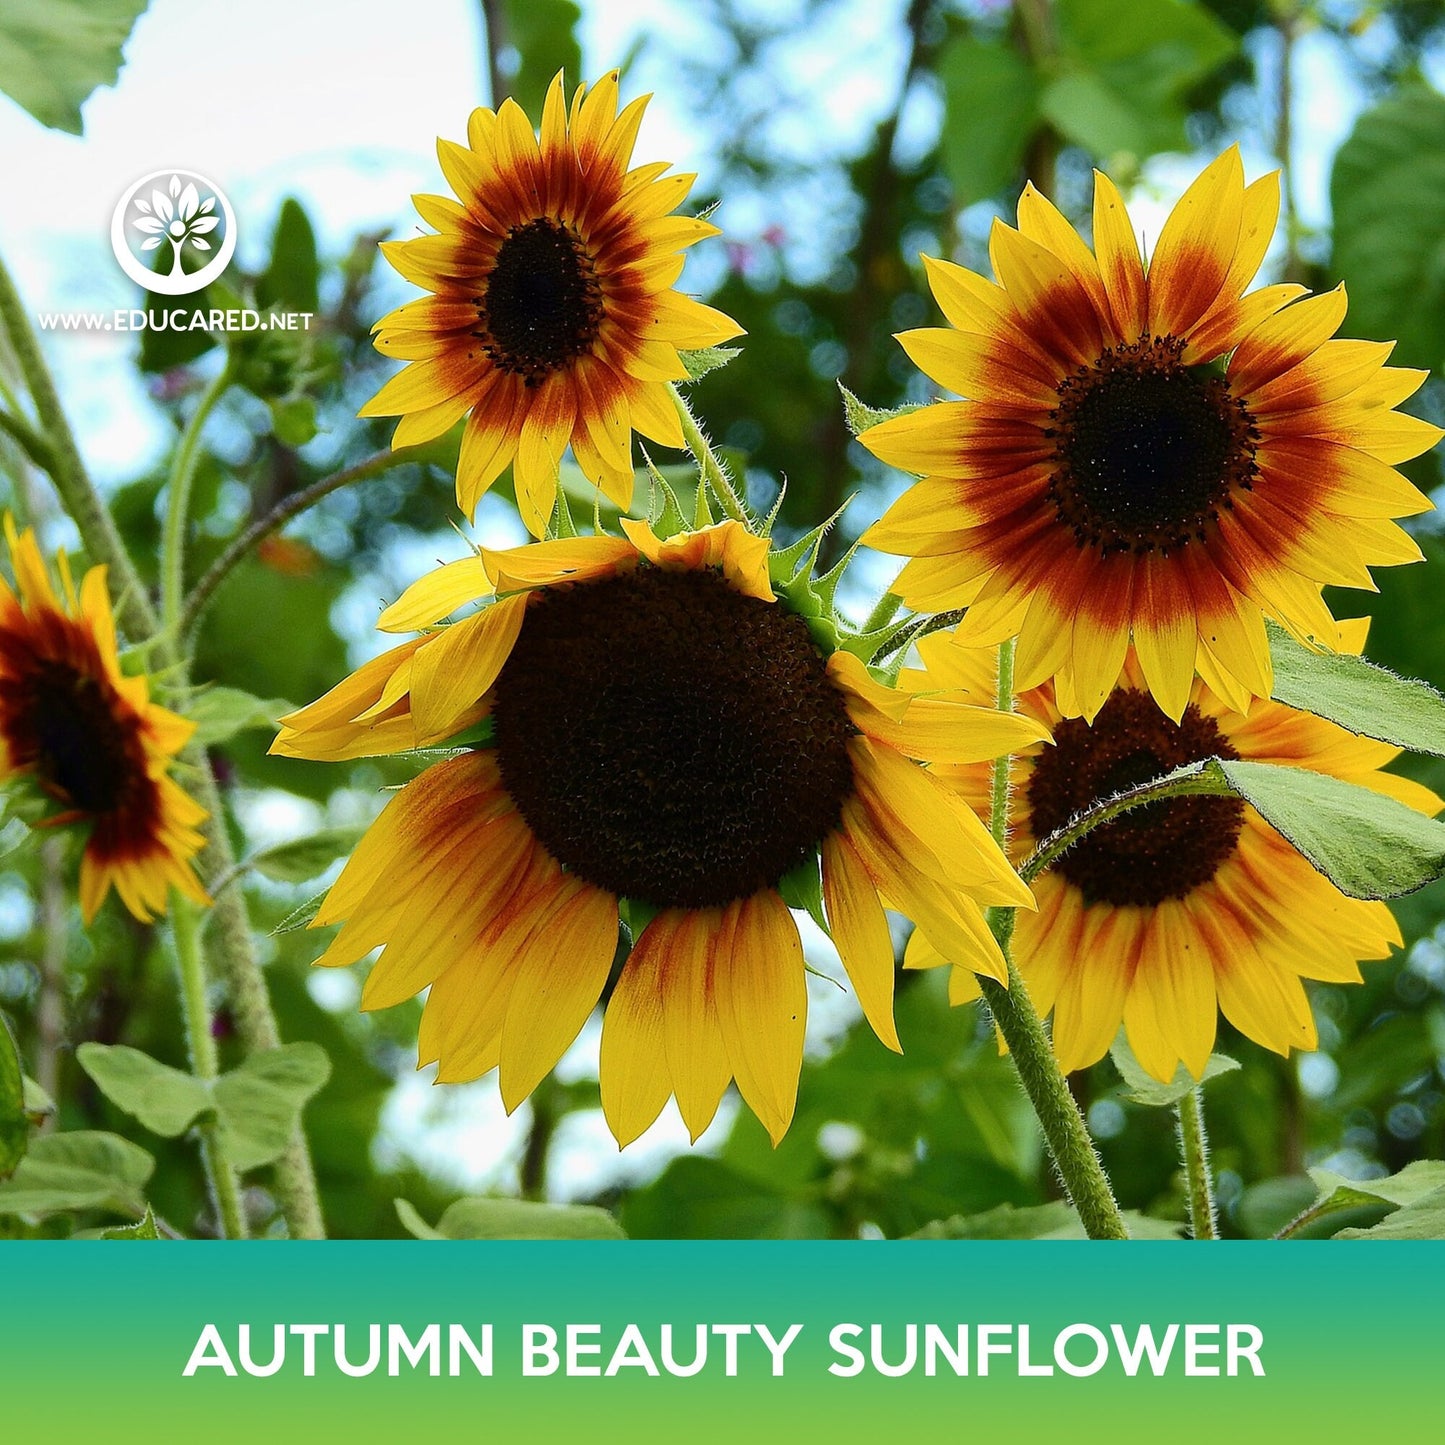 Autumn Beauty Sunflower Seeds